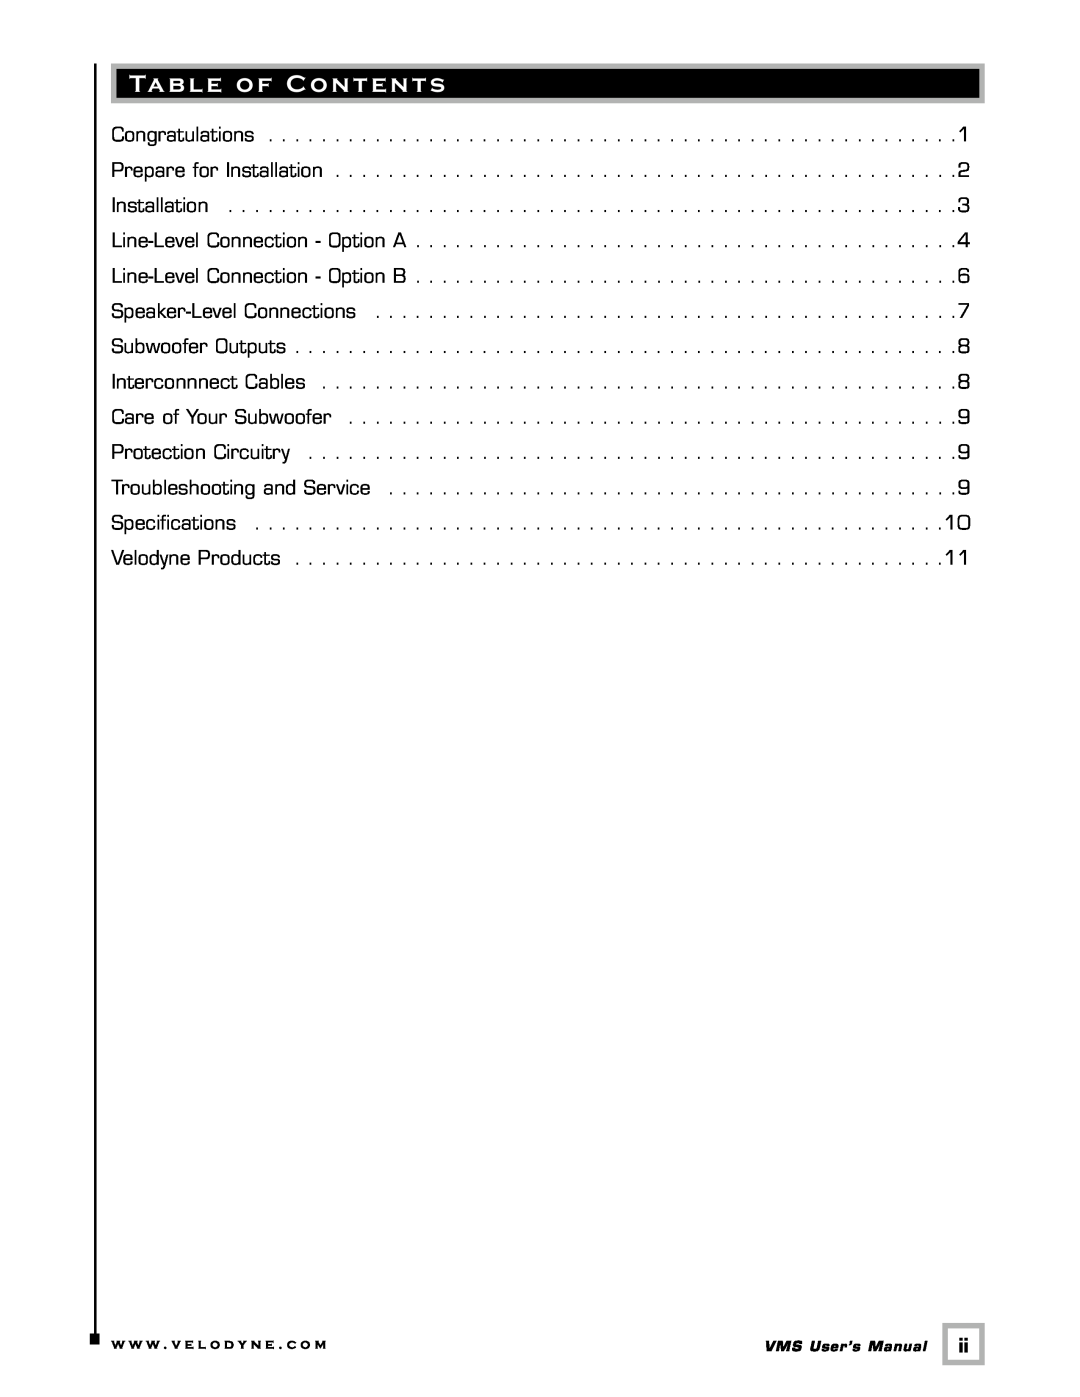 Velodyne Acoustics VMS-8 user manual Table of Contents, w w w . v e l o d y n e . c o m 